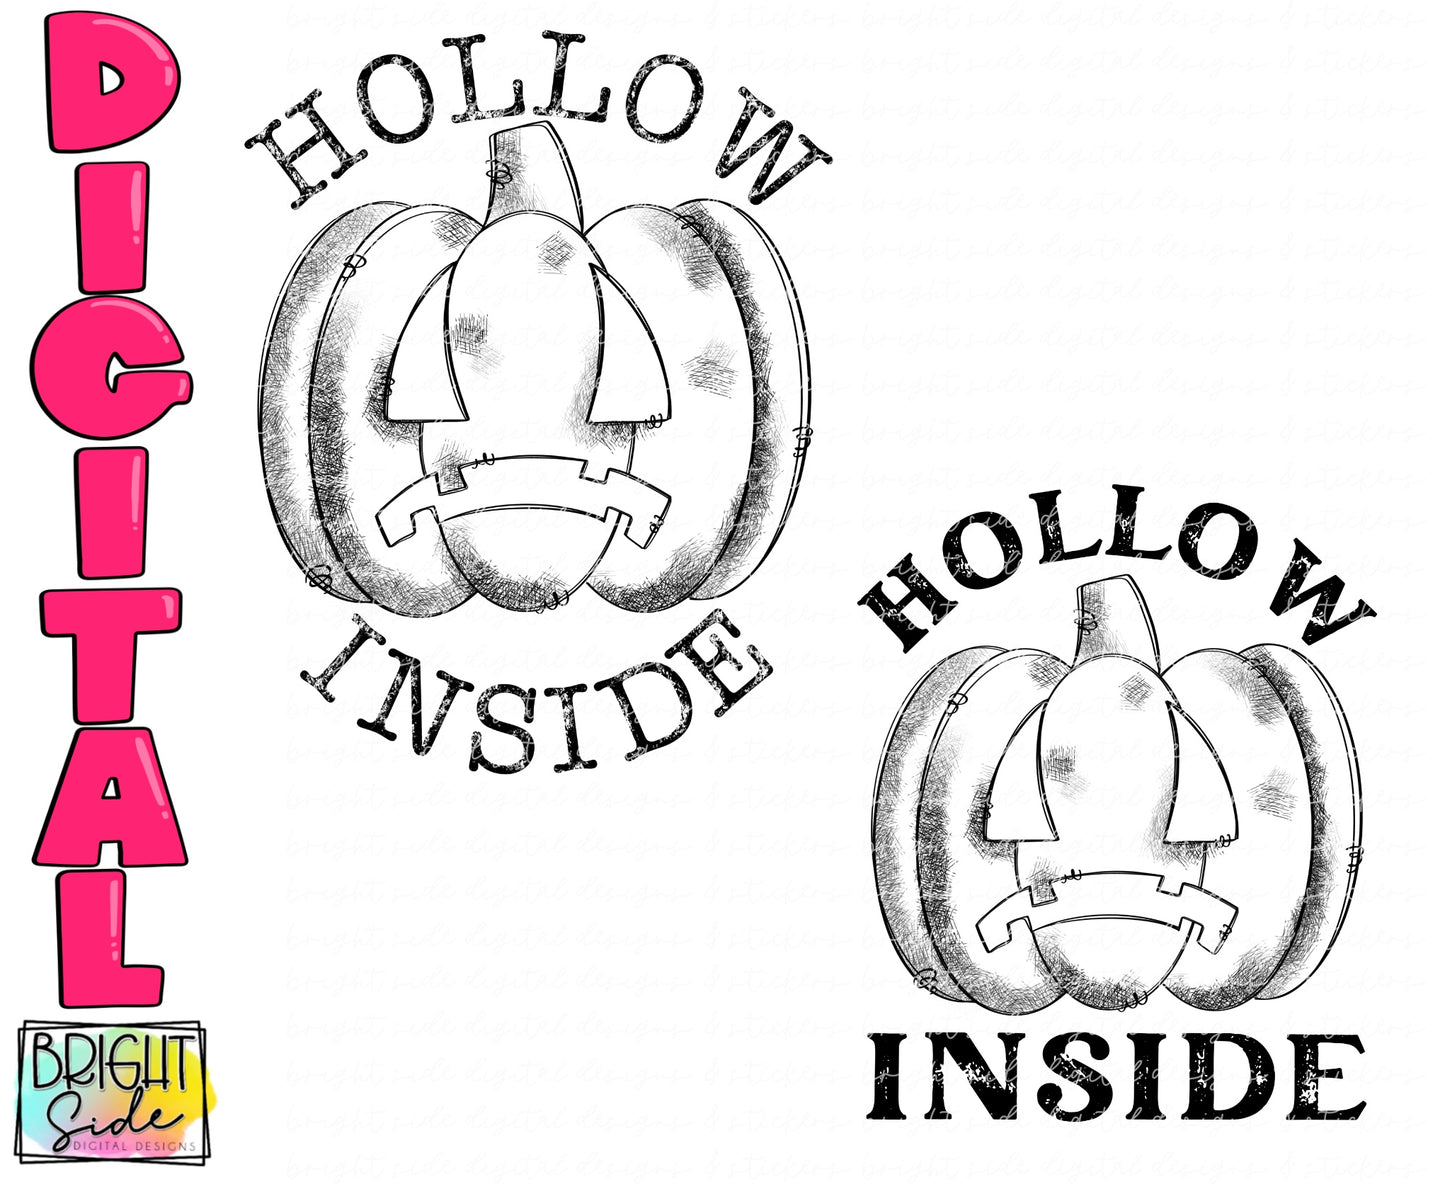 Hollow inside - 2 Designs